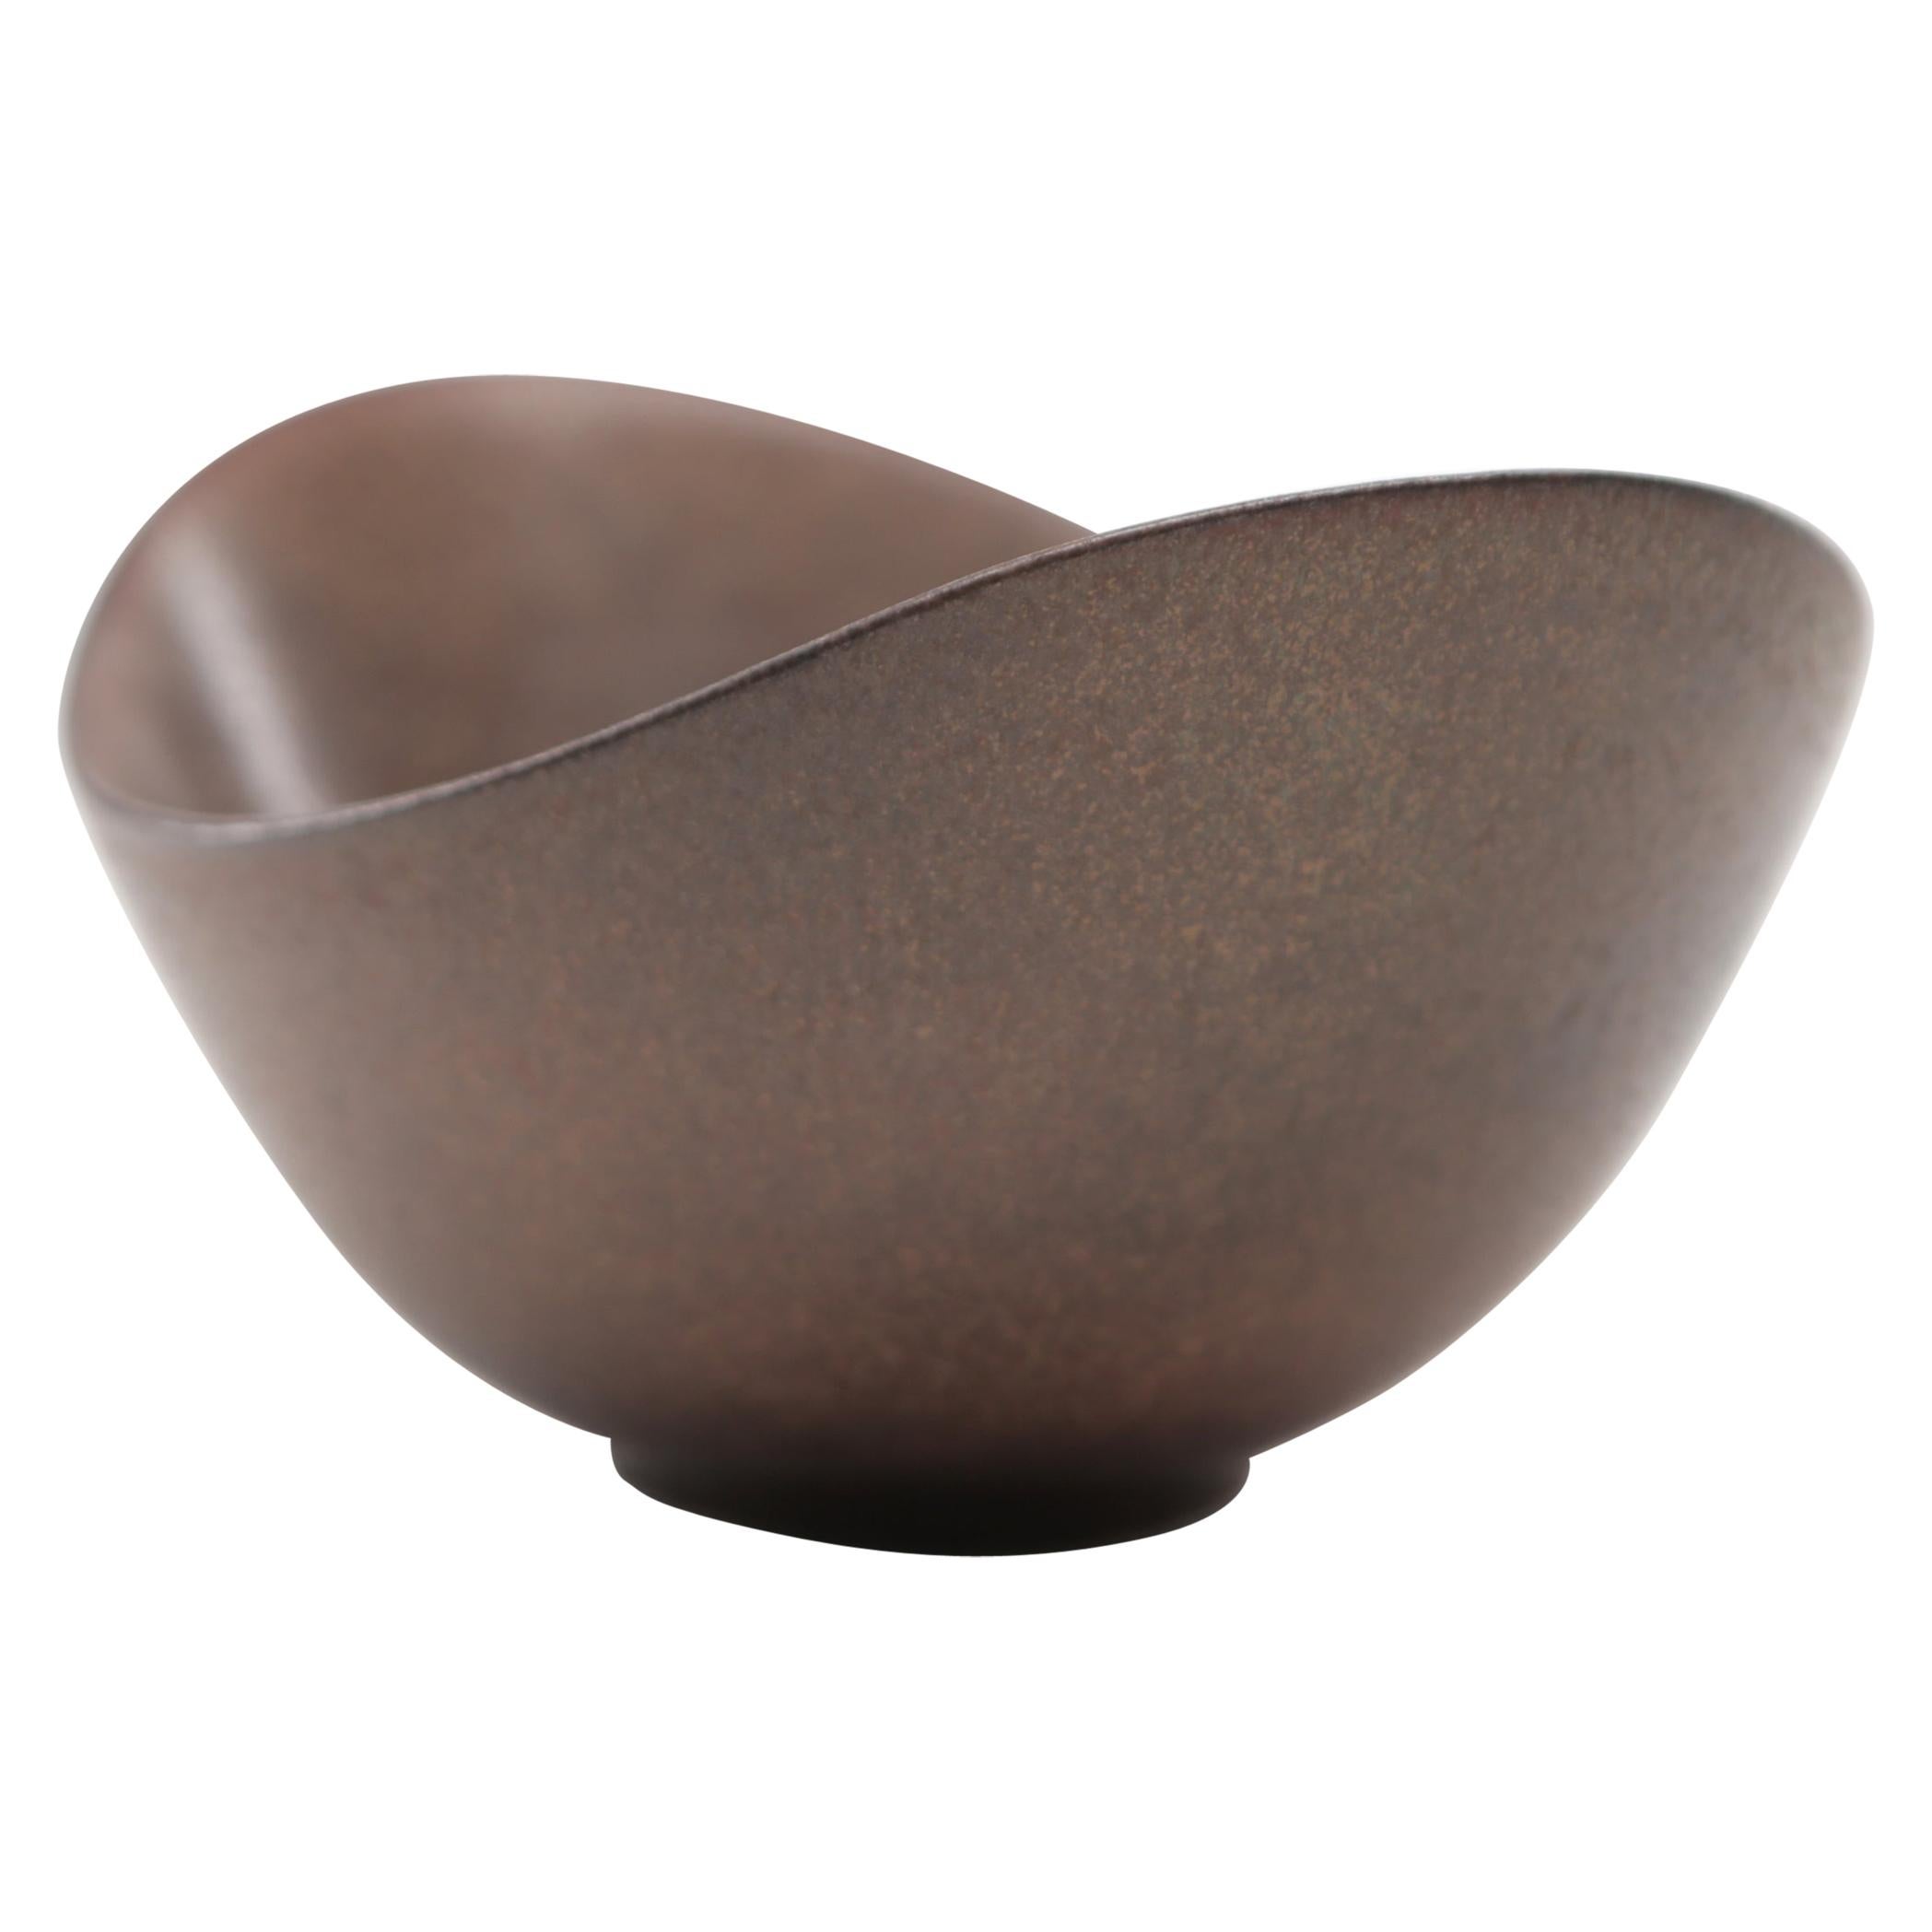 Gunnar Nylund "ARO" Medium Stoneware Bowl by Rorstrand, Sweden, 1960s